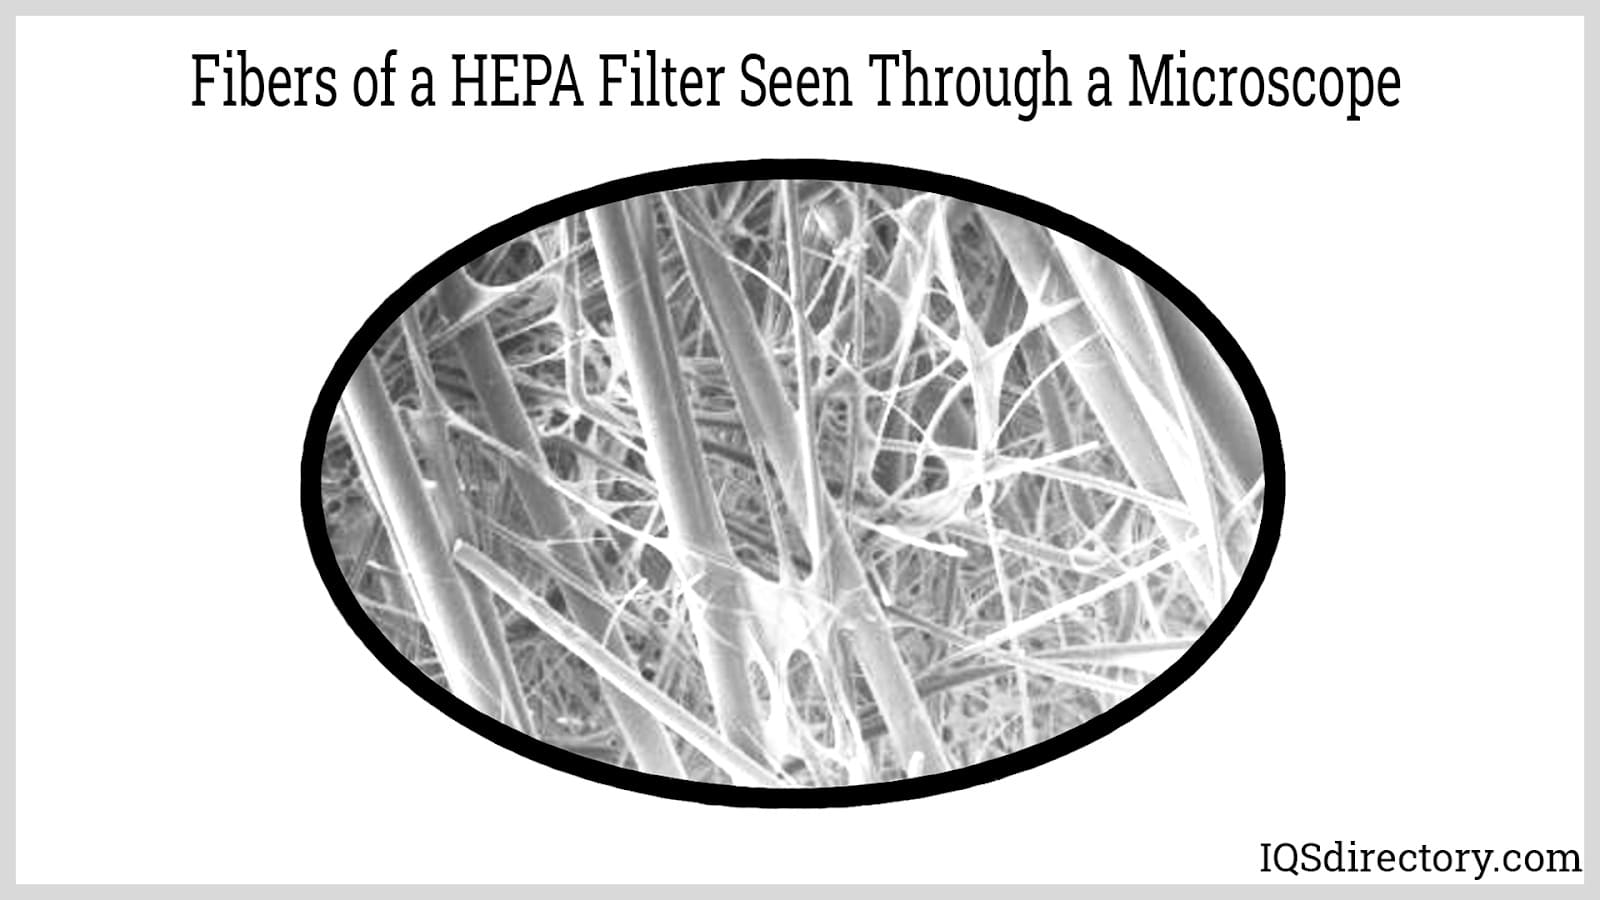 Fibers of a HEPA Filter Seen Through a Microscope